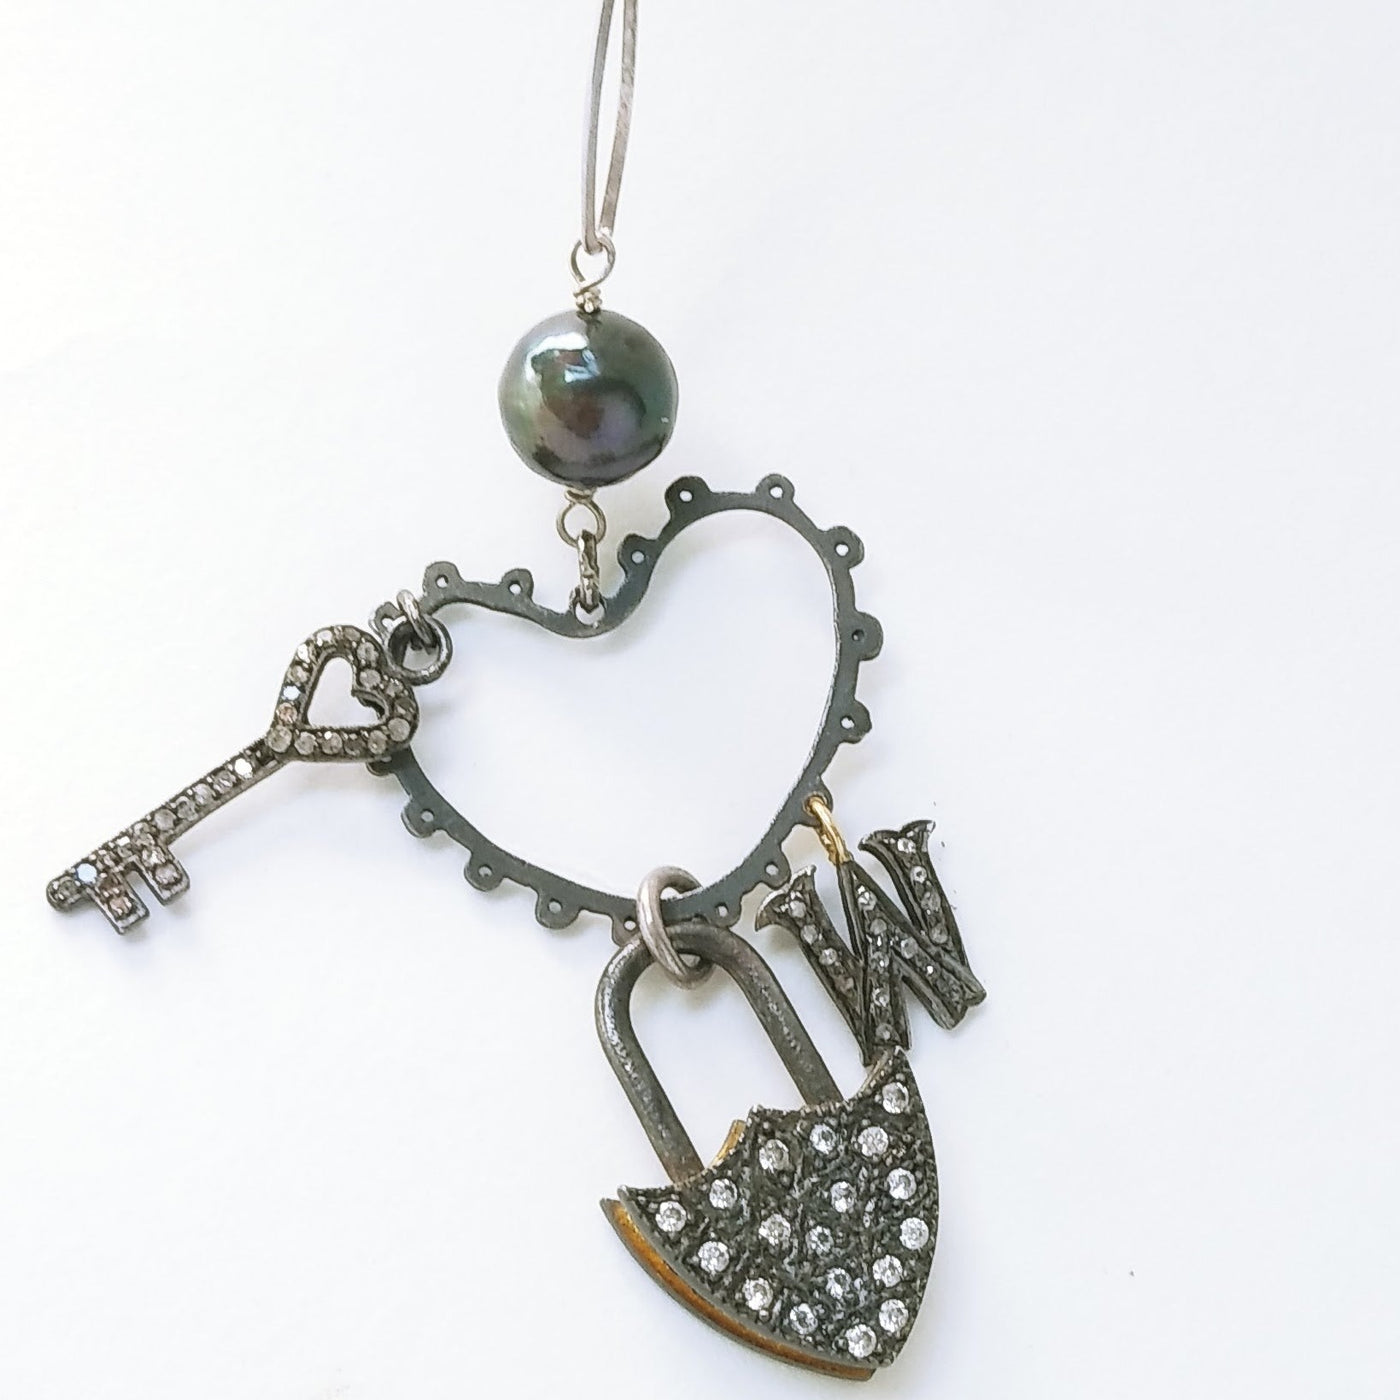 "I Heart Key West" 2.75" Pendant Necklace - Pearl, Diamonds, White Topaz, Black Sterling, 18K Accents